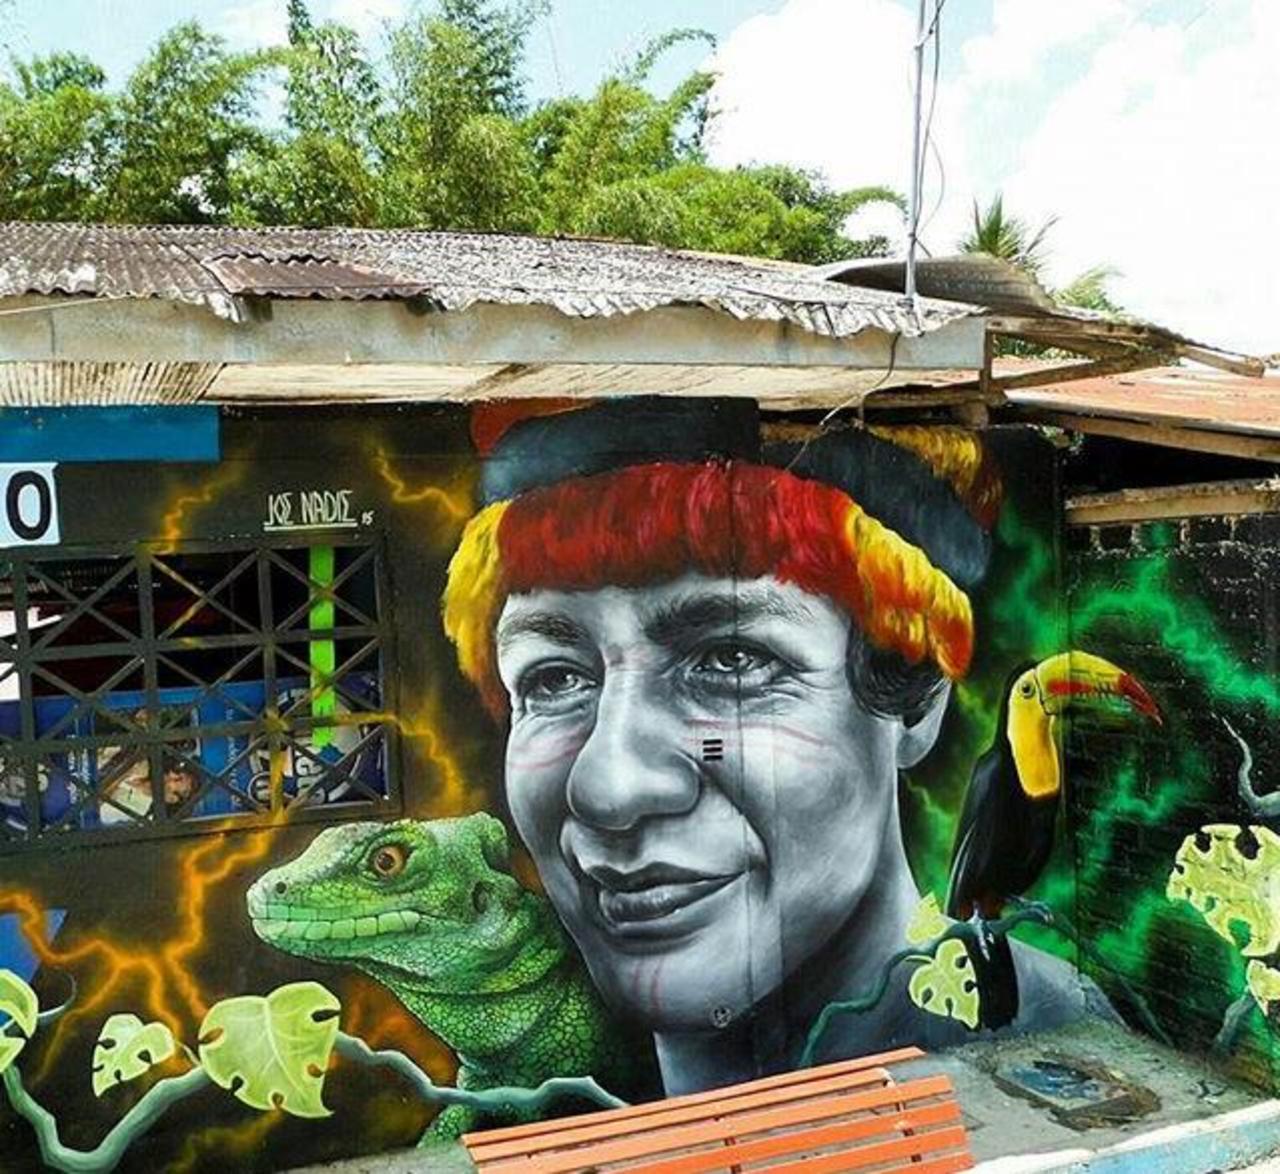 RT @BlossomTweetMe: I love this: Street Art by Joe Nadie

#art #mural #graffiti #streetart http://t.co/R81GC2nms6 MT @GoogleStreetArt